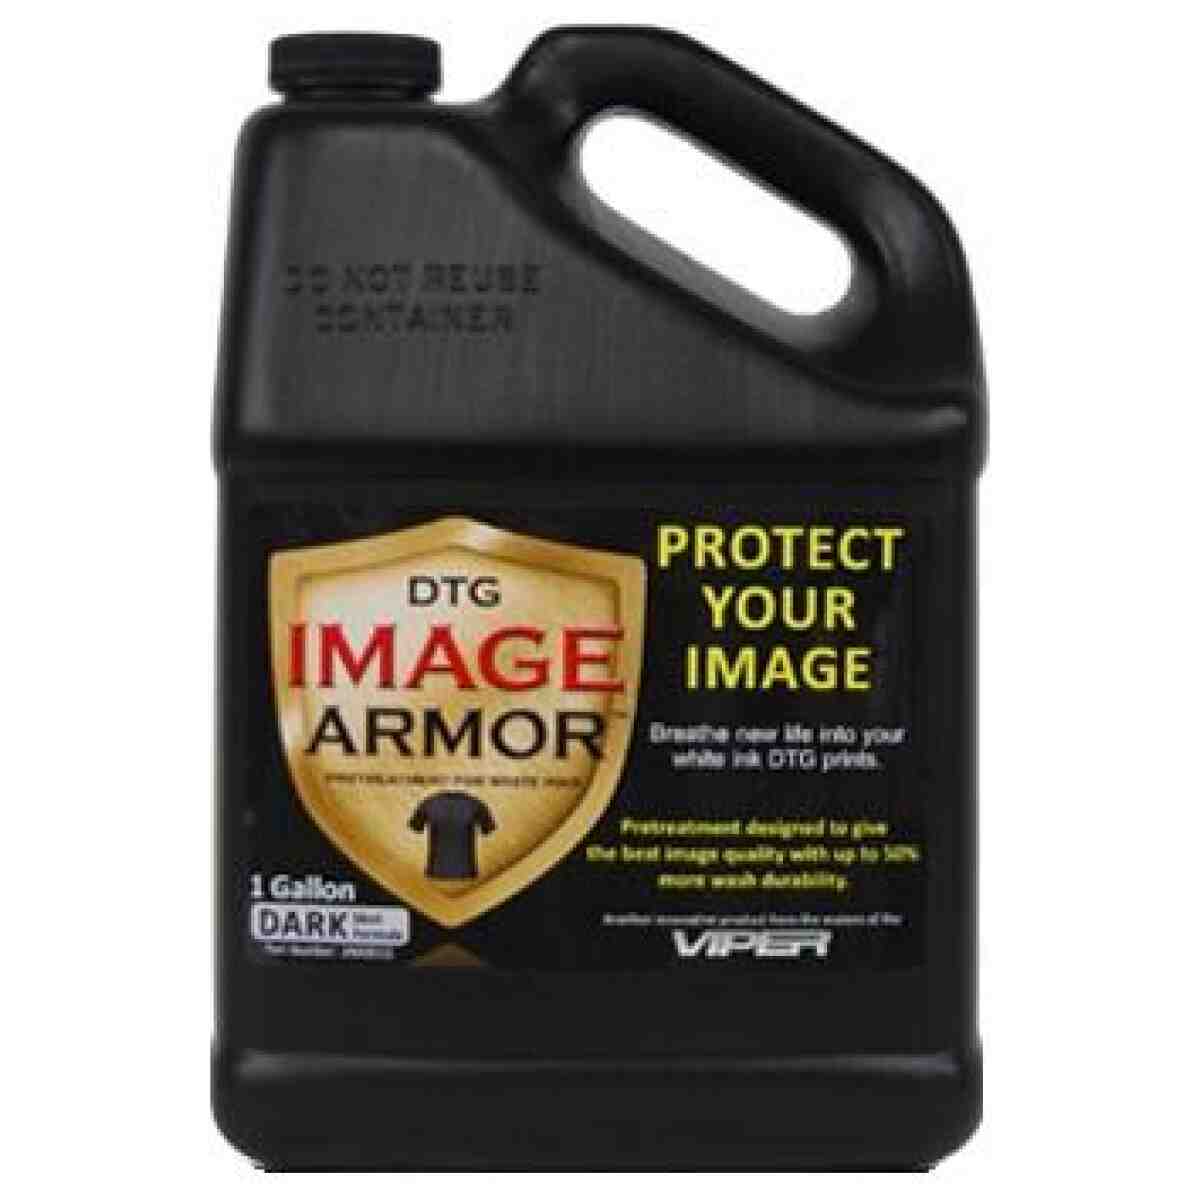 Image Armor Pre-Treatment Dark Formula Black Label IMAGE ARMOR®